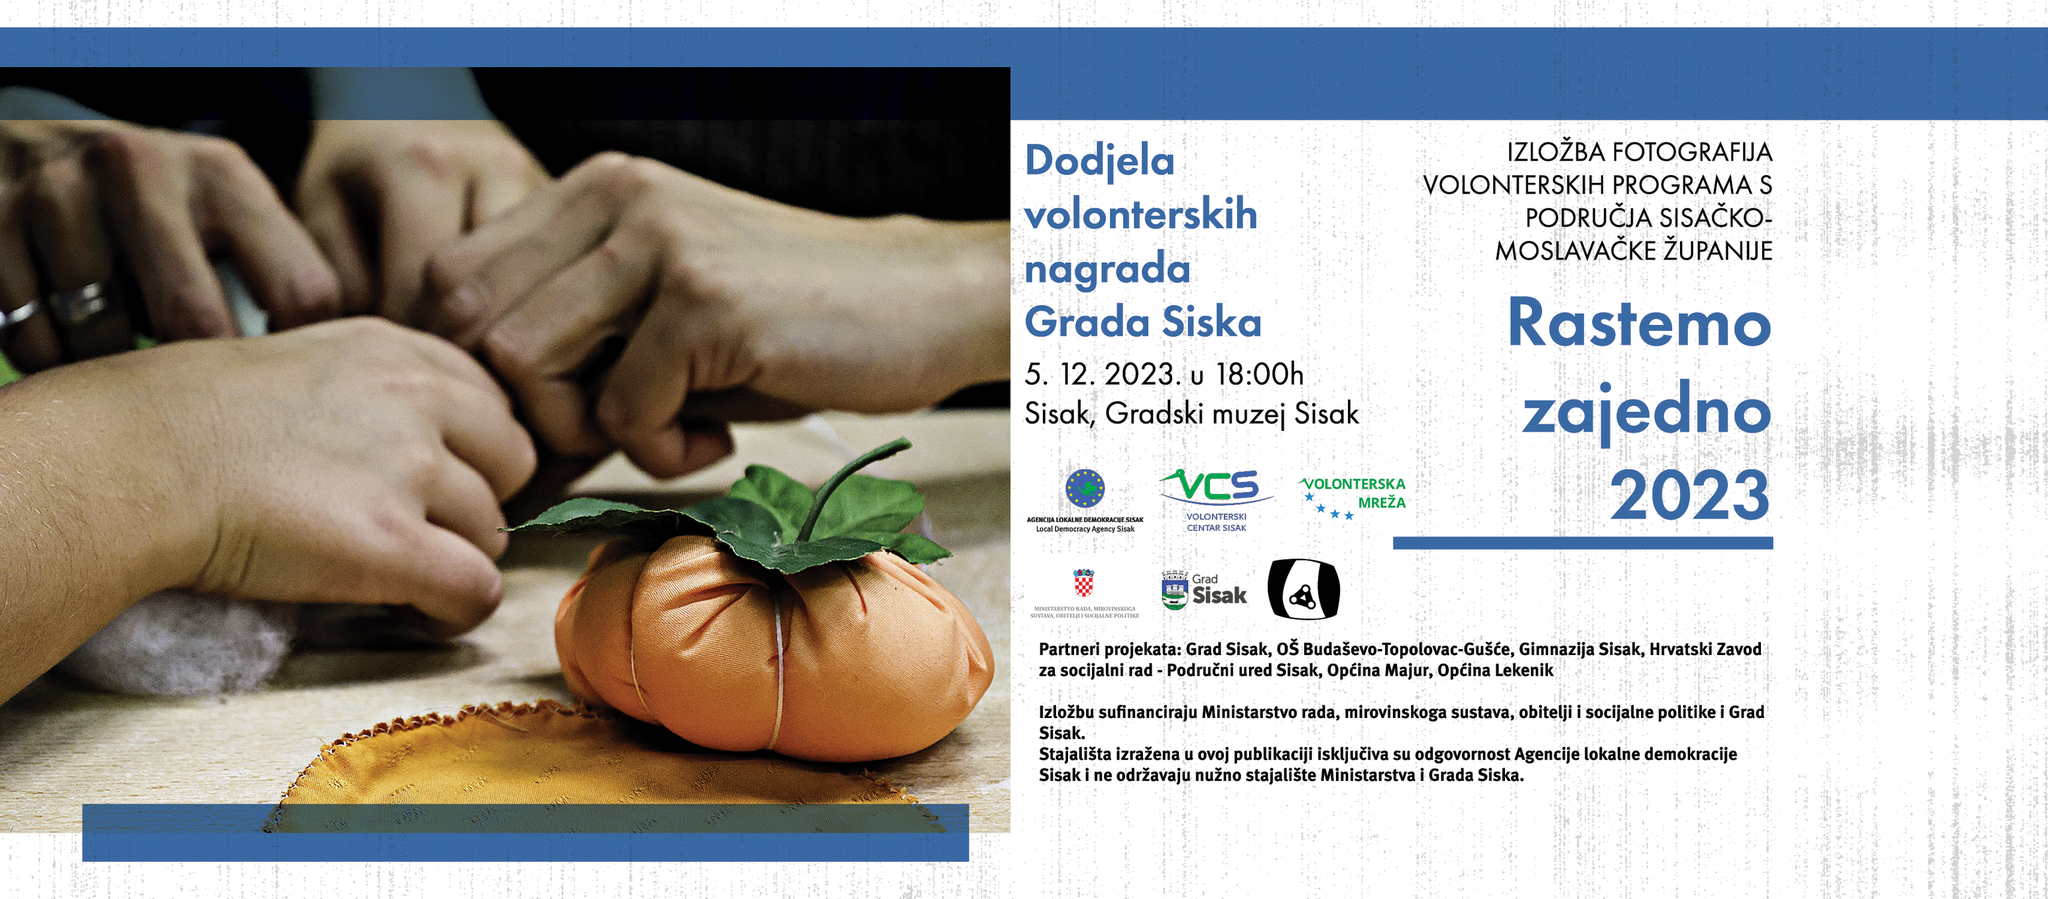 You are currently viewing Dodjela volonterskih nagrada Grada Siska